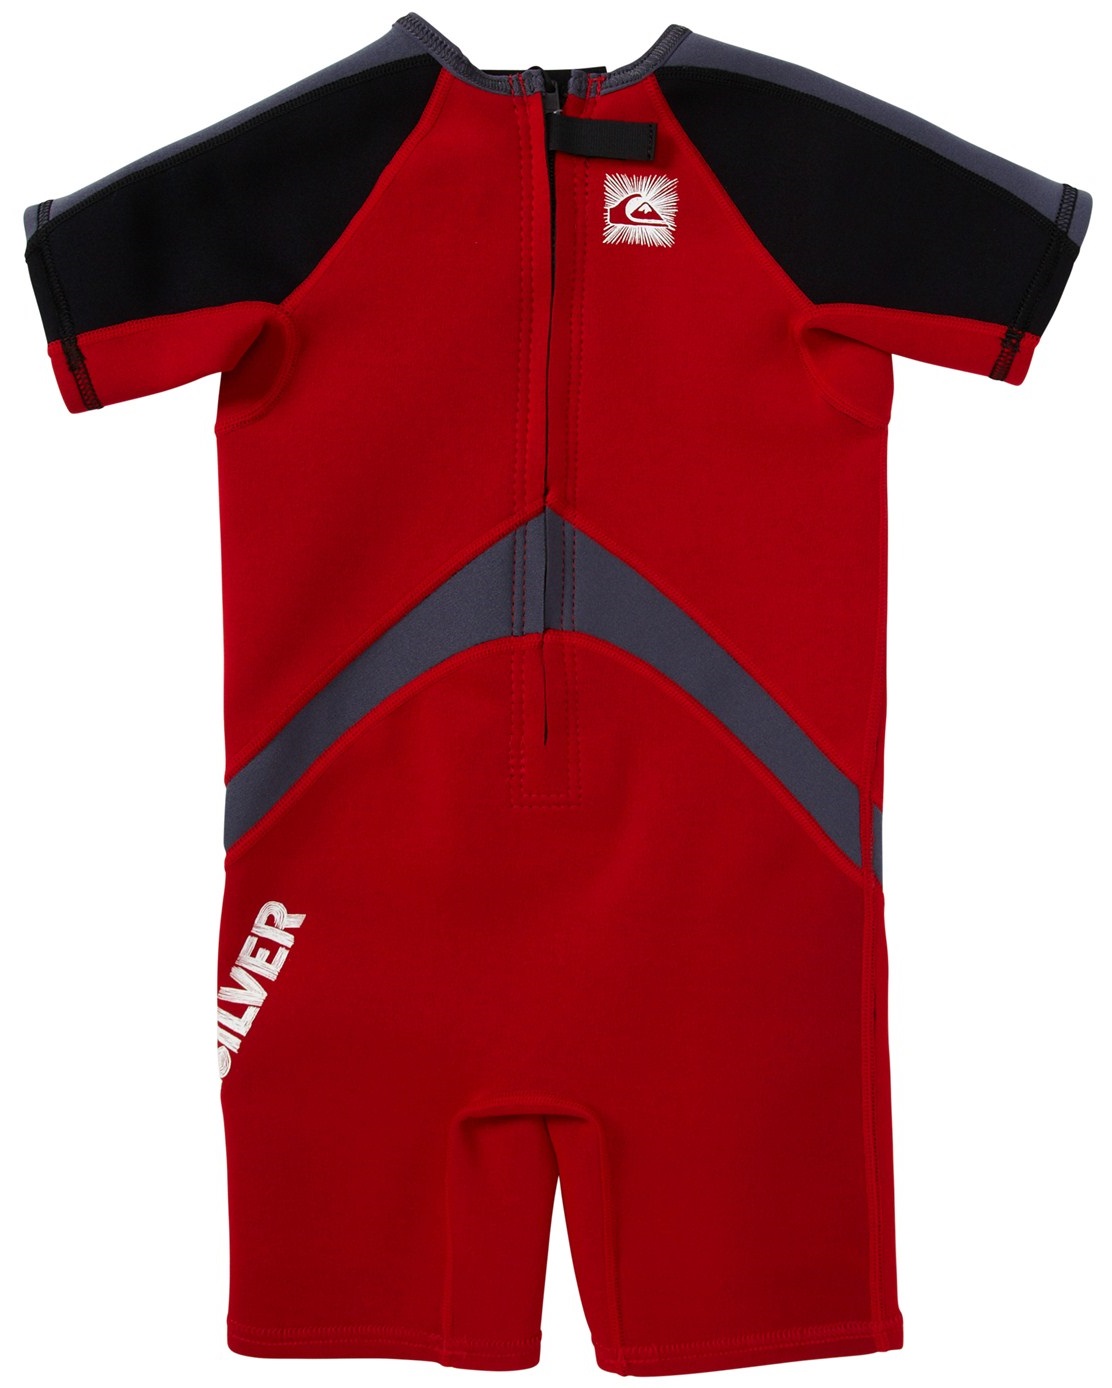 Quiksilver Syncro Wetsuit Boys Toddler Springsuit 1.5mm - Red Black